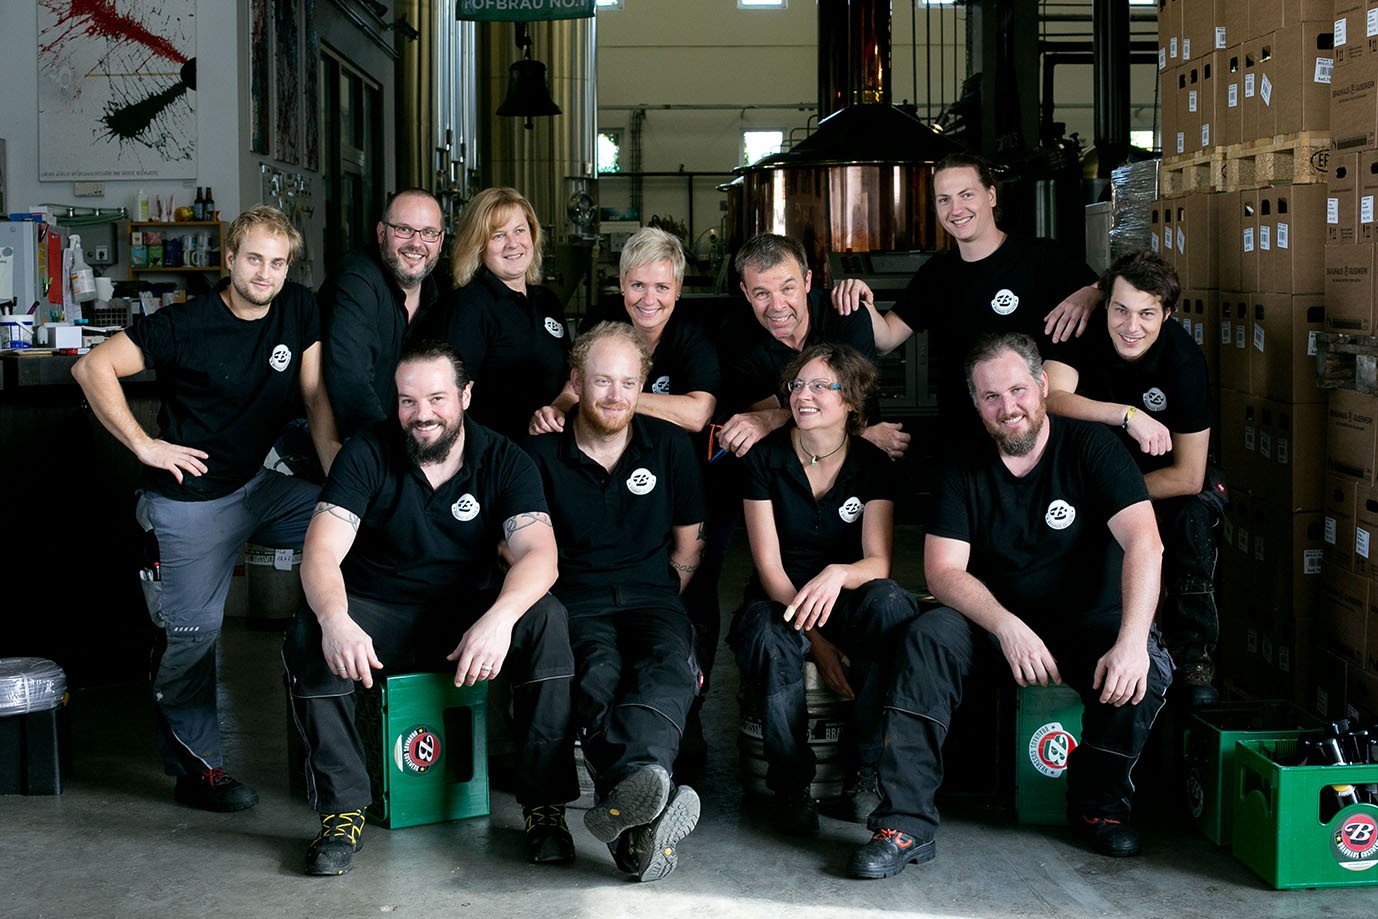 Brauhaus Gusswerk brewery from Austria